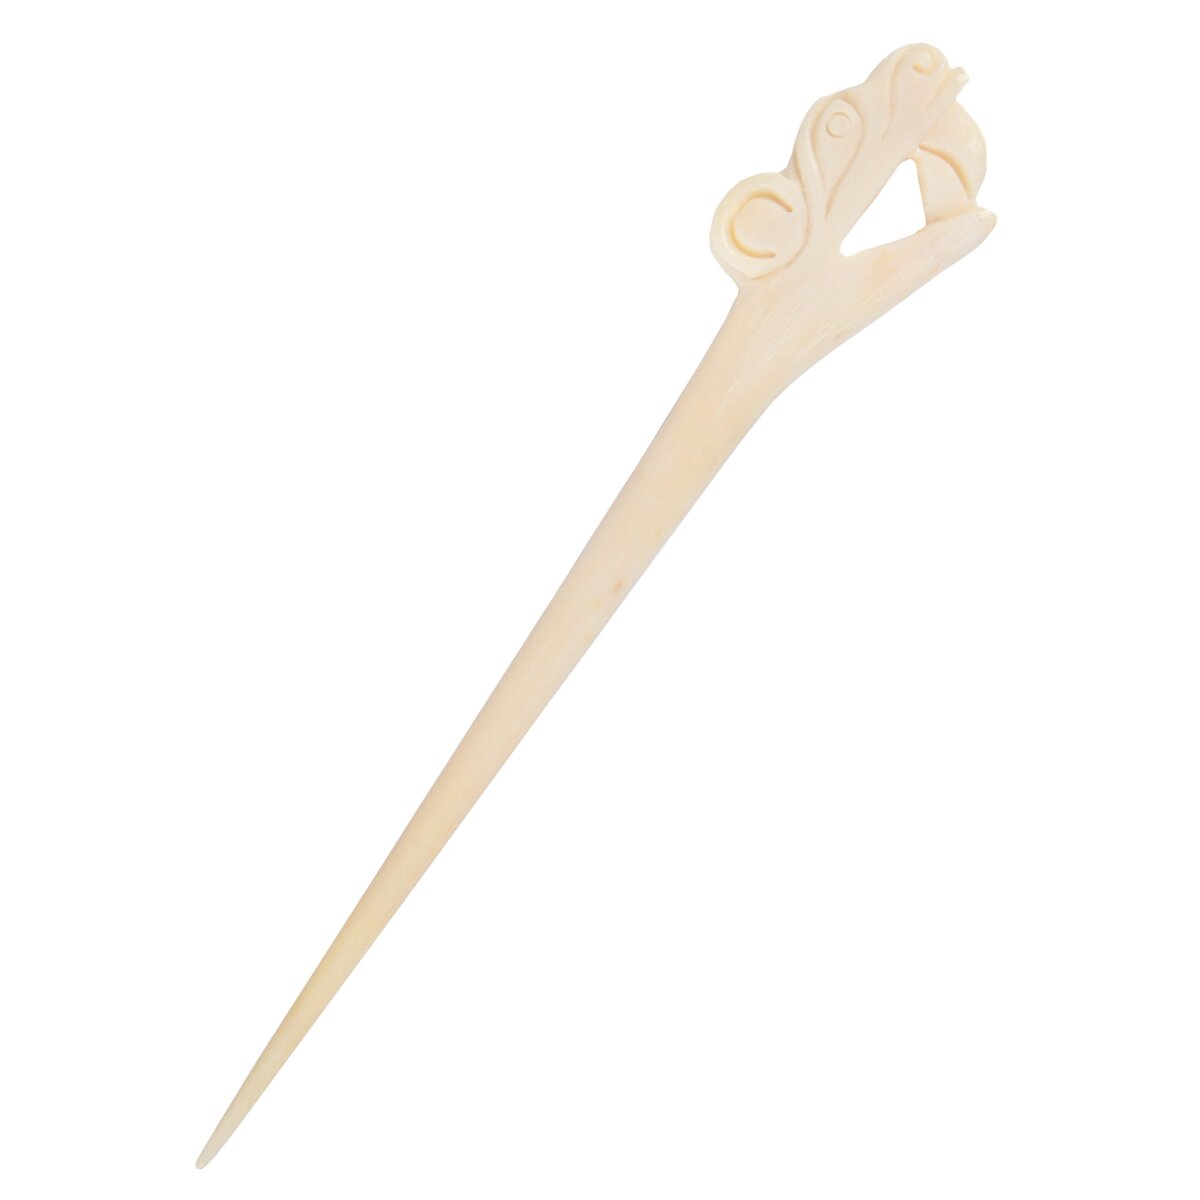 Viking bone pin from Haithabu, garment pin, hairpin